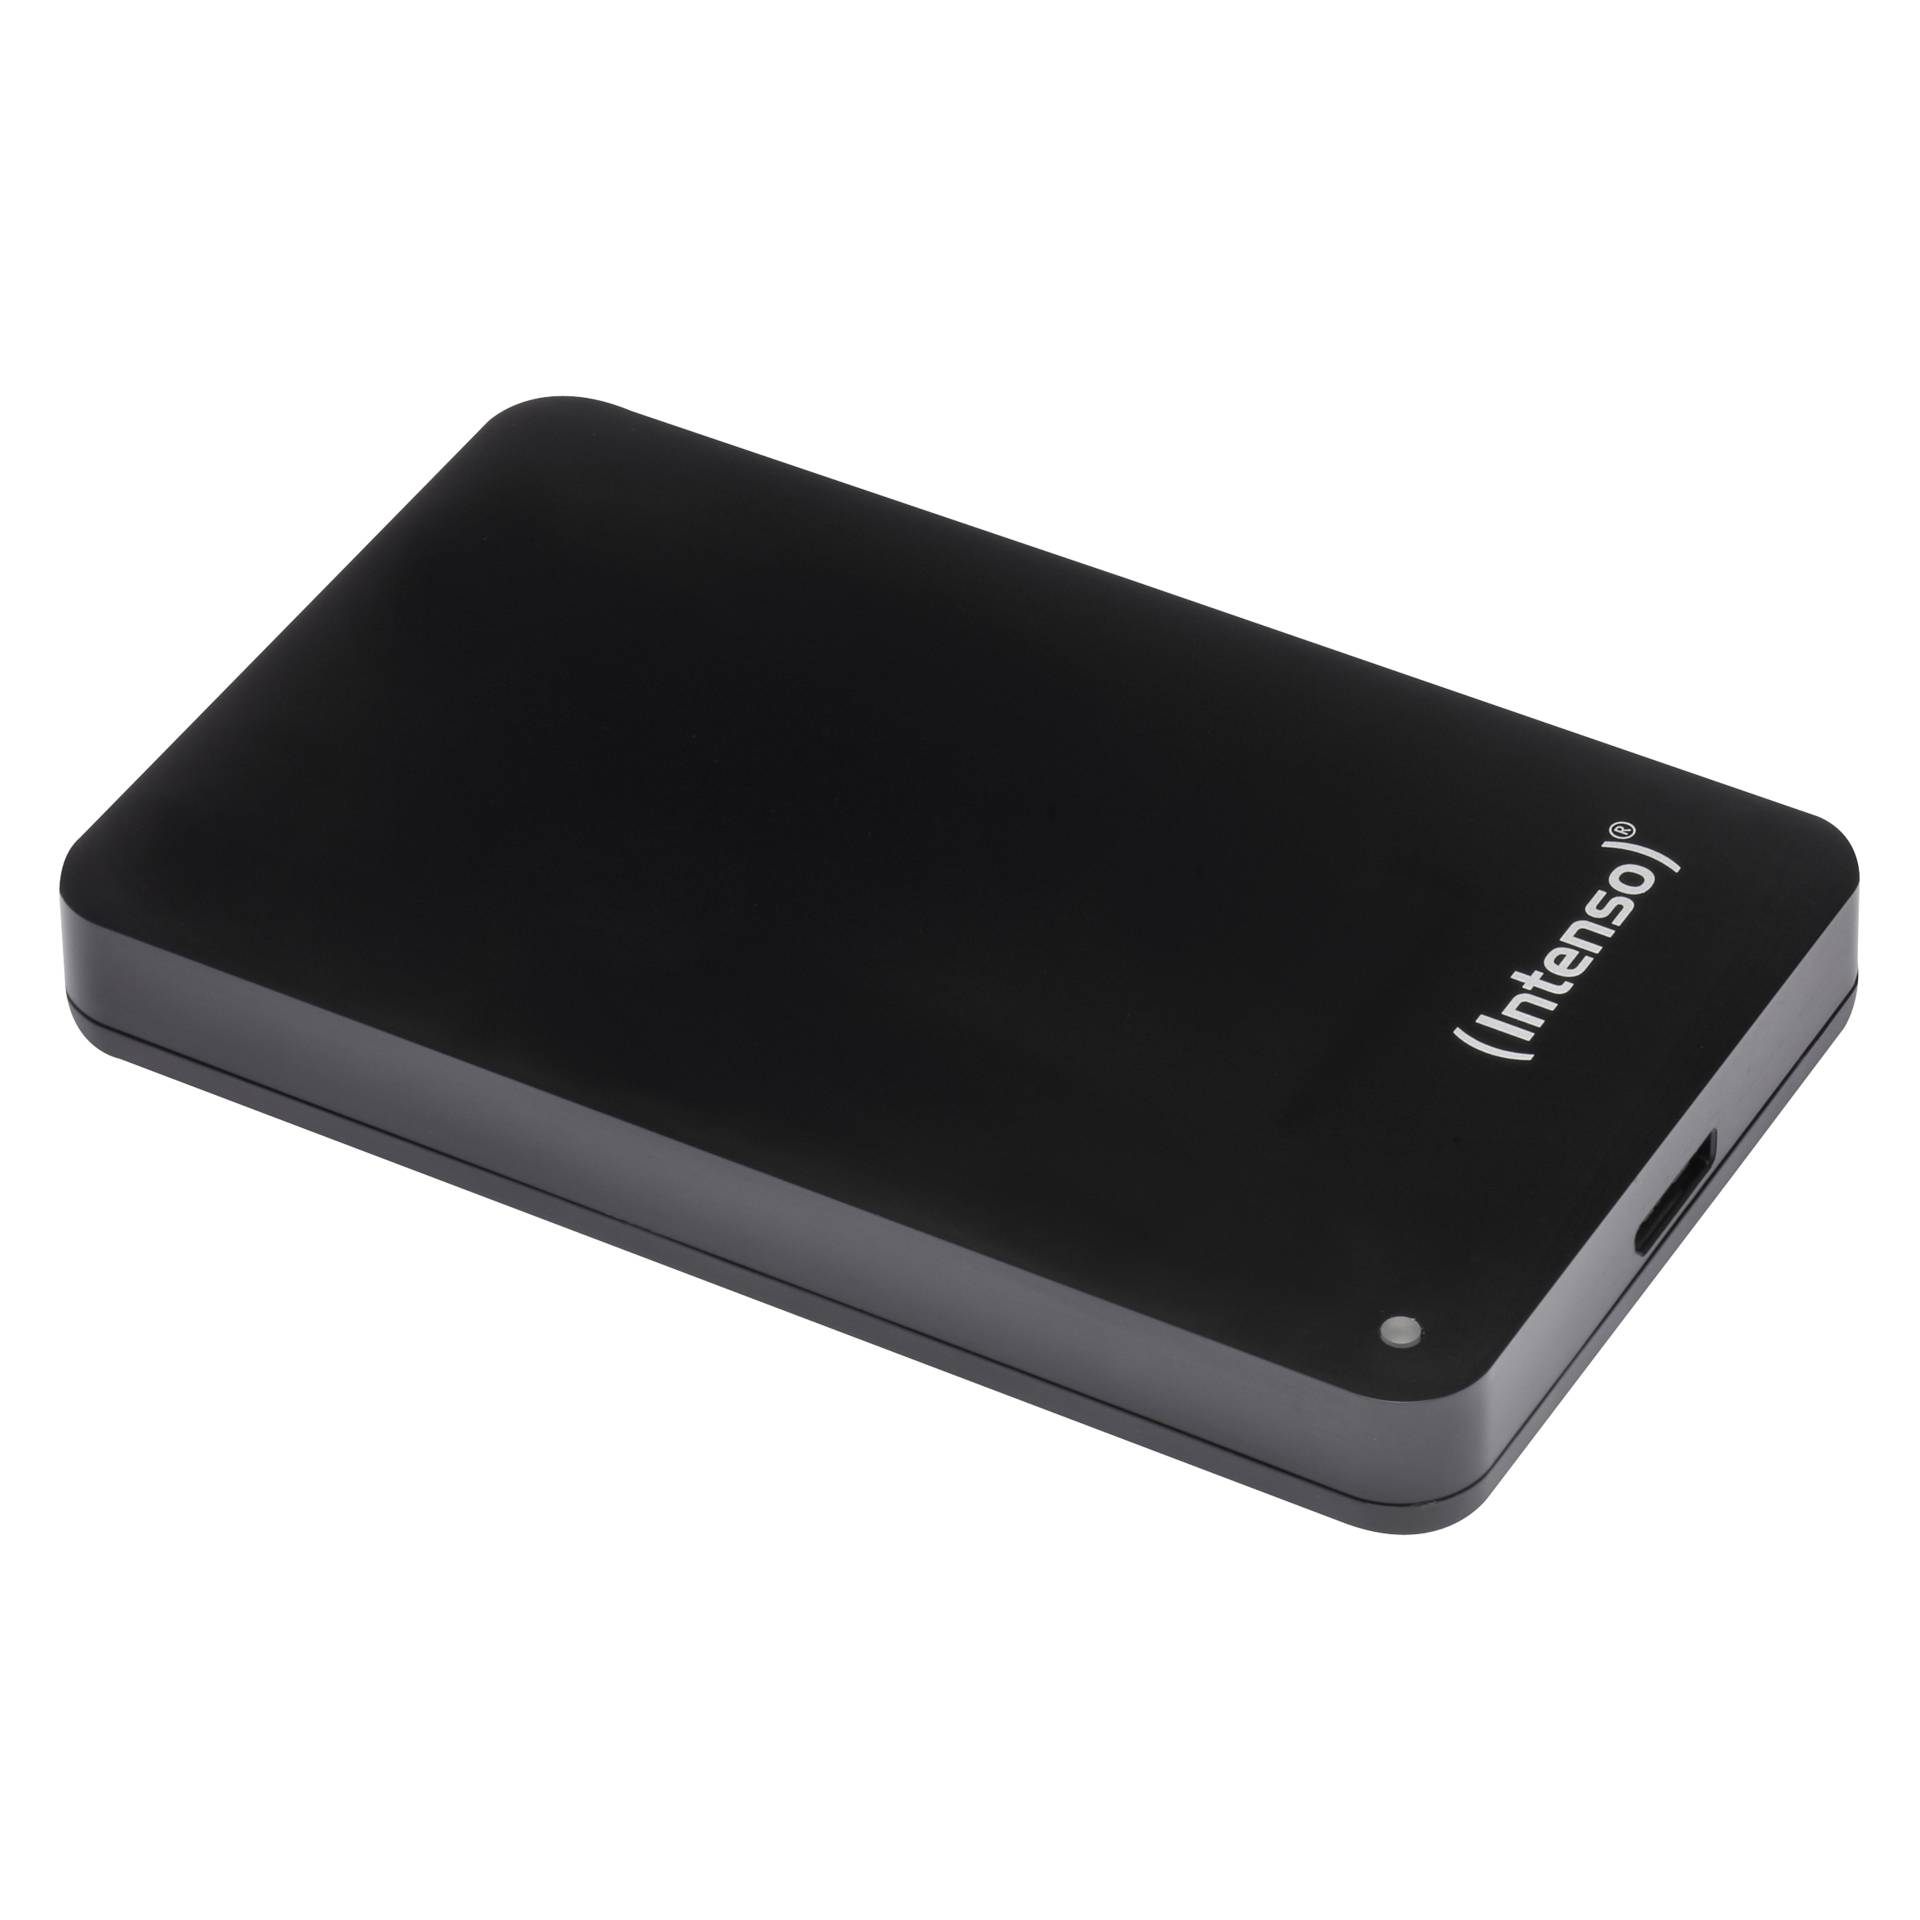 500 GB HDD Intenso Memory Case schwarz 2.5 Zoll / 6.4cm USB 3.0